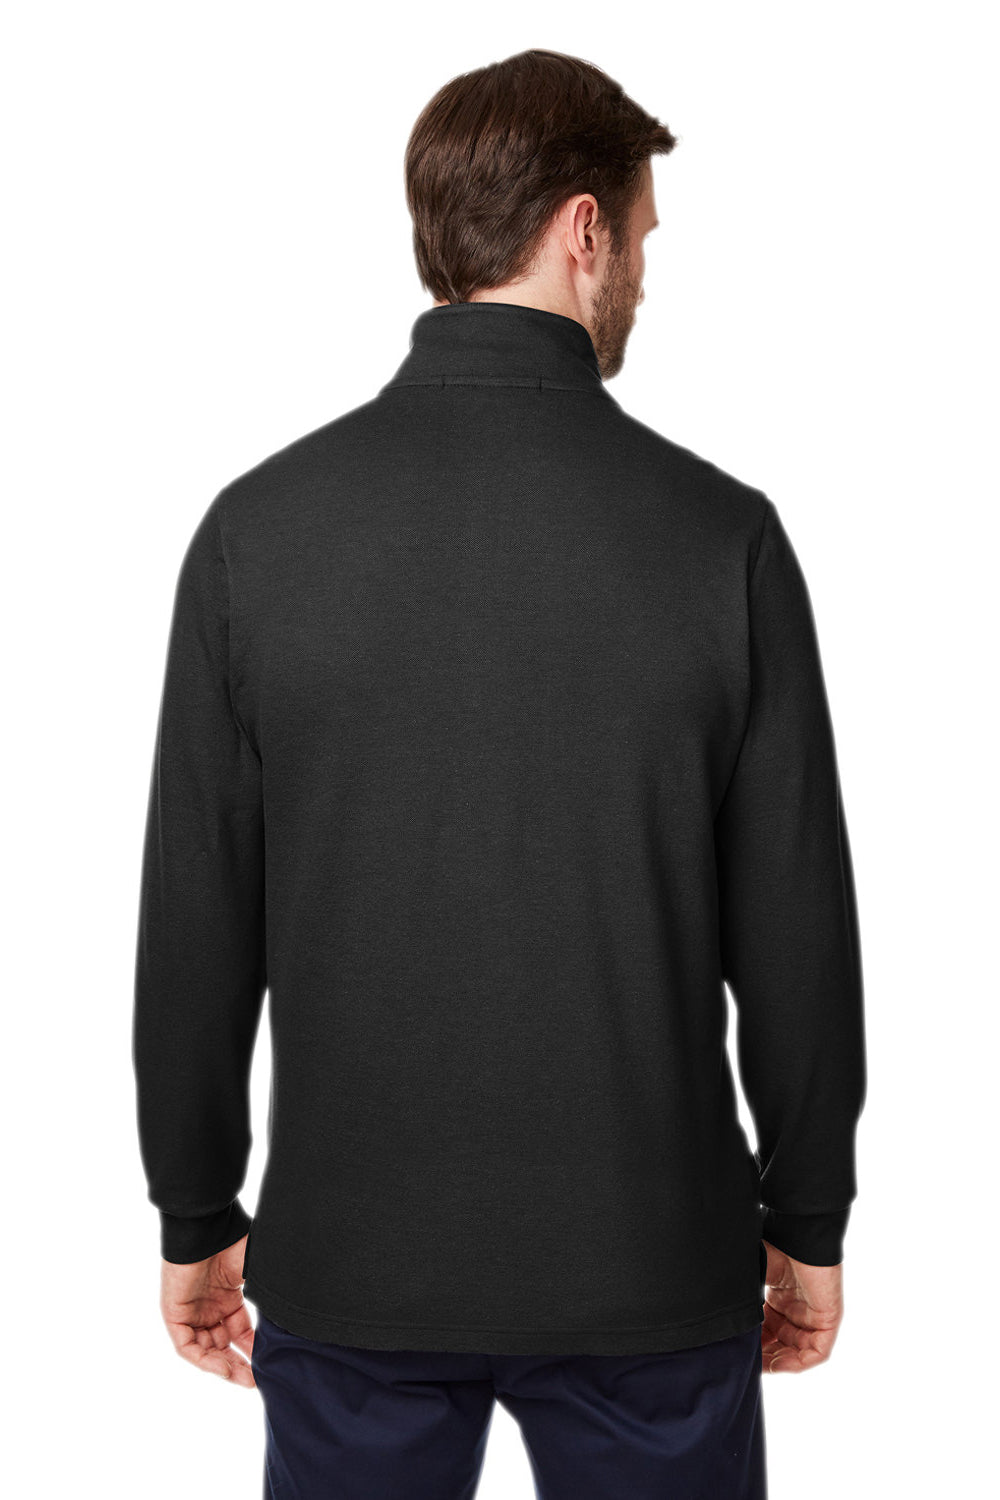 Devon & Jones DG400 Mens New Classics Performance Moisture Wicking 1/4 Zip Sweatshirt Black Back